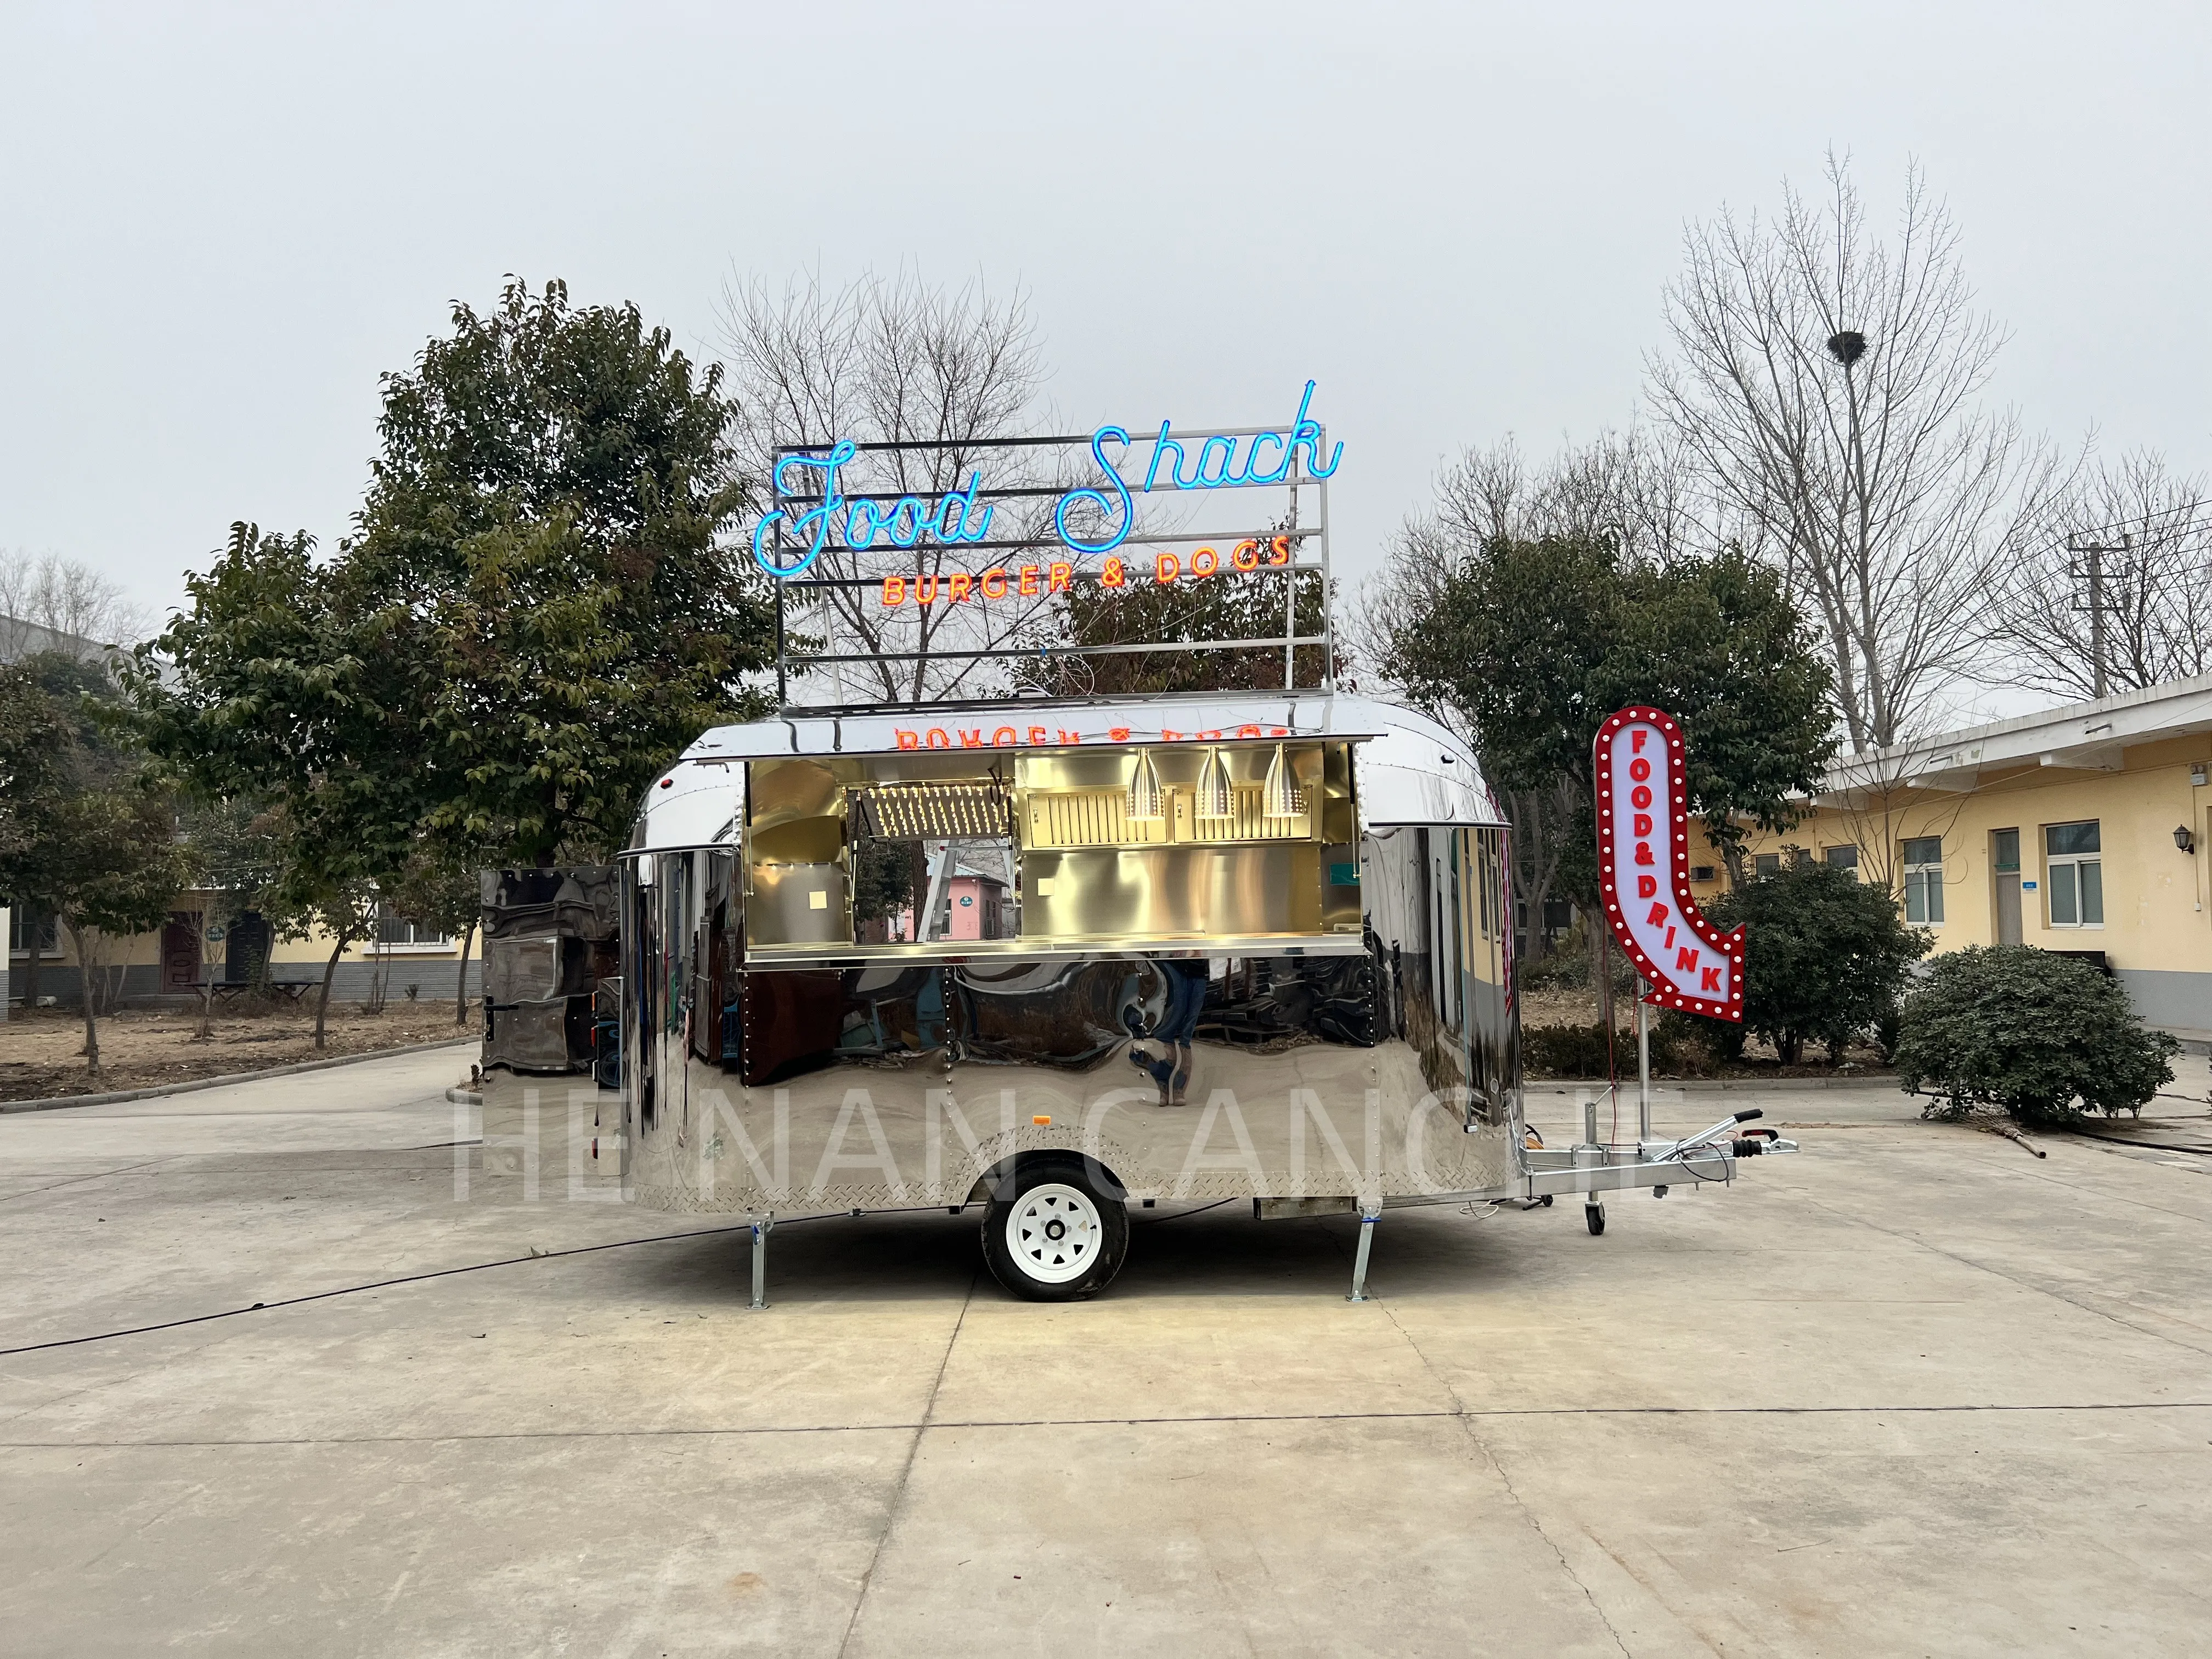 

Camion De Comida Mobile Street Food Vending Cart Restaurant Kebab Hot Dog Pizza Food Trailer